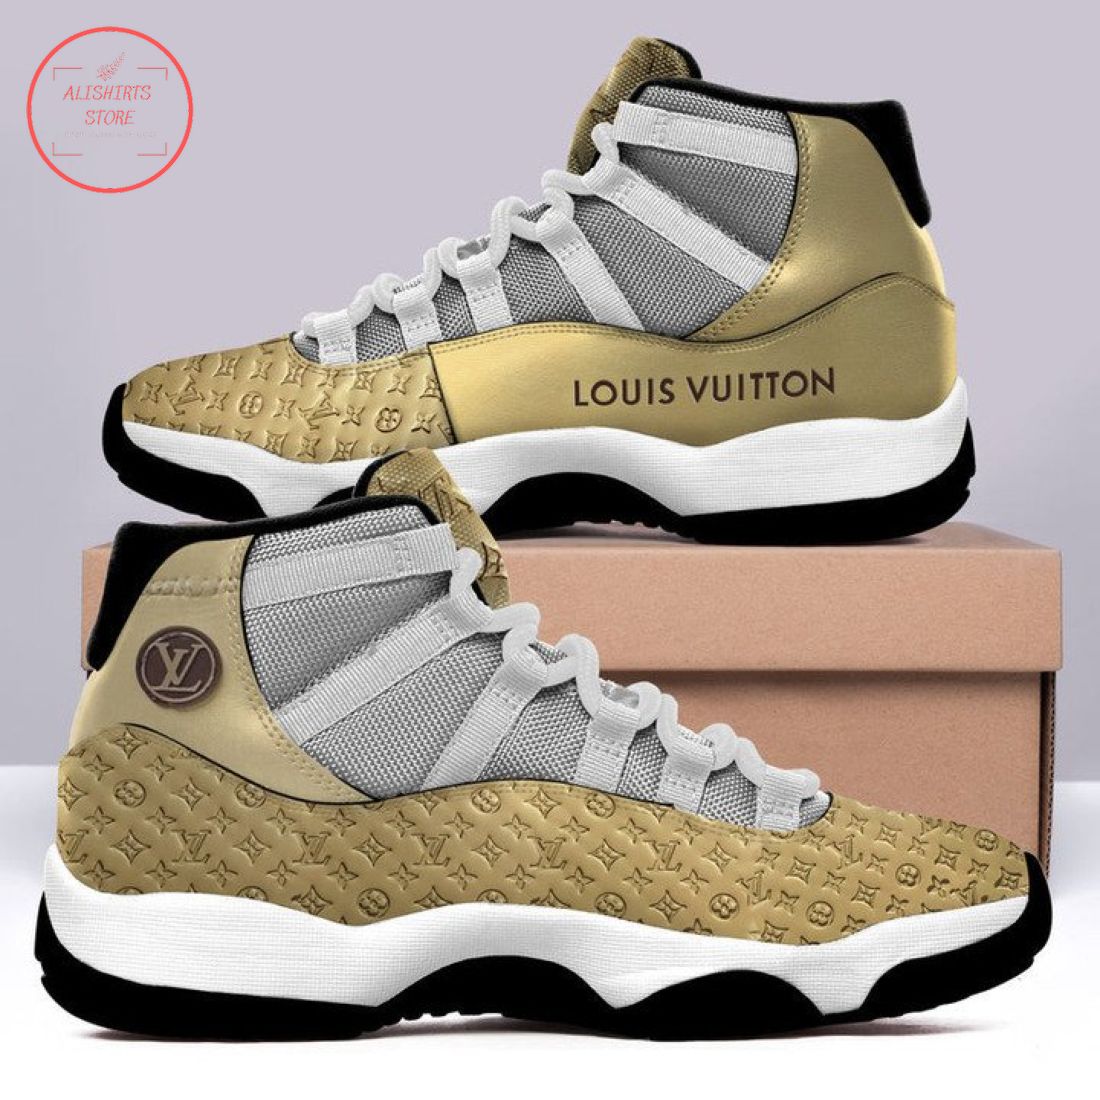 Louis Vuitton LV Gold Air Jordan 11 Sneaker Shoes